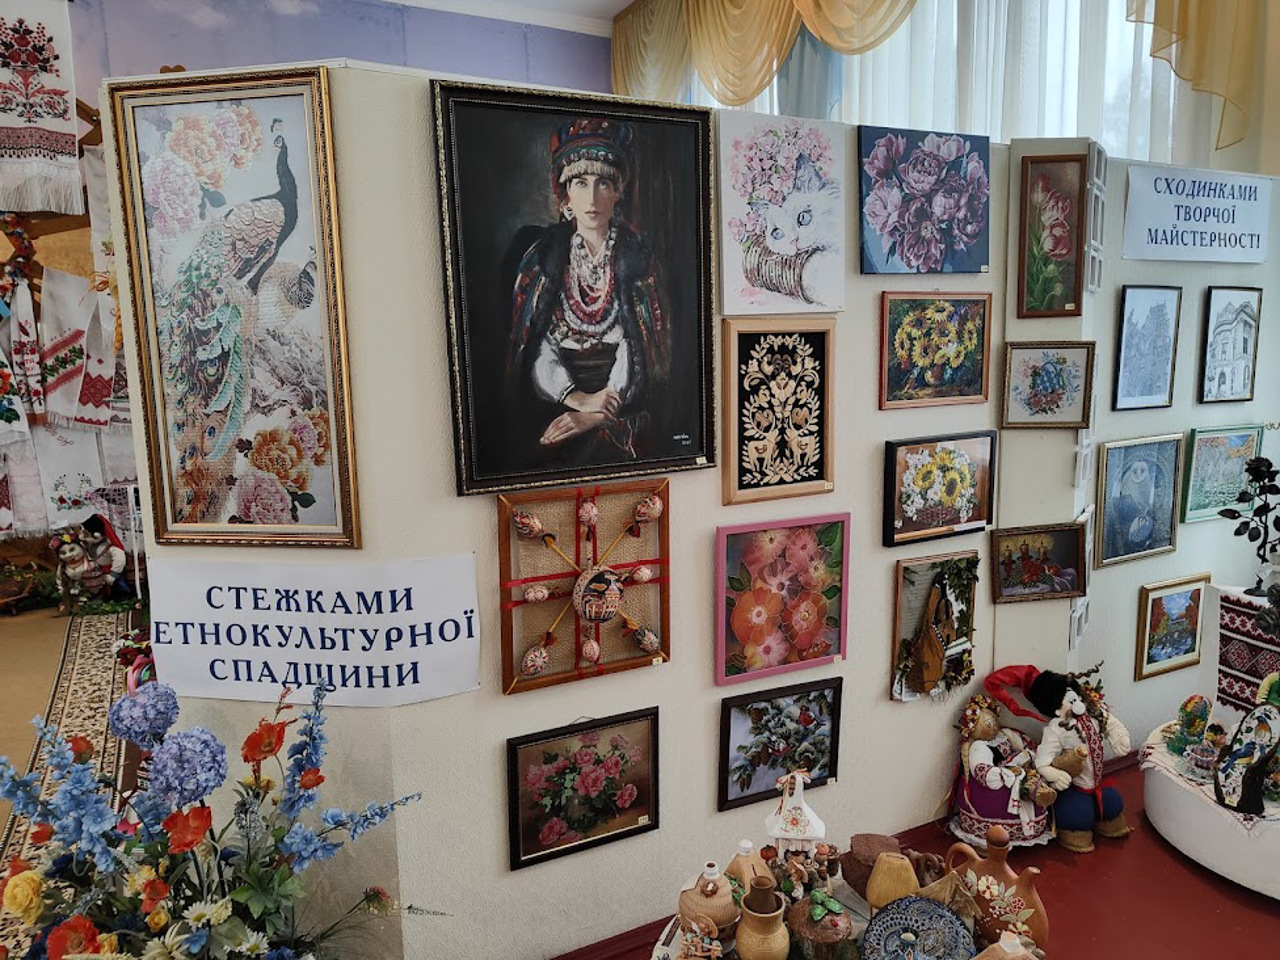 Ukrainian Costume and Easter Egg Museum, Nemishaieve